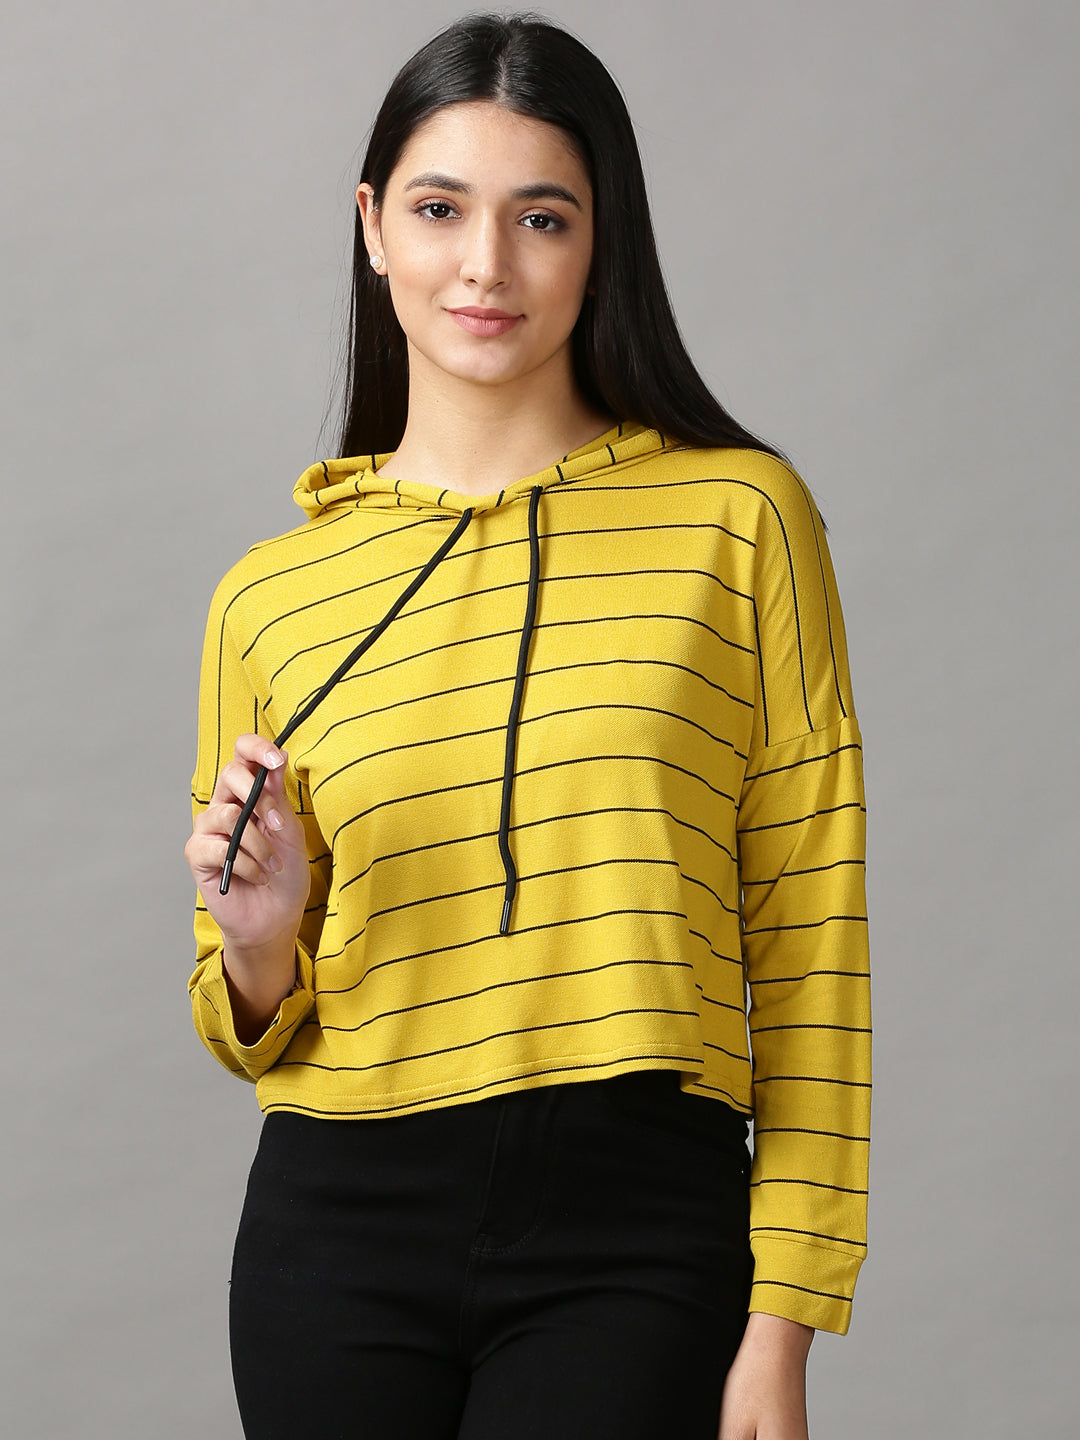 Women's Yellow Striped Crop Top